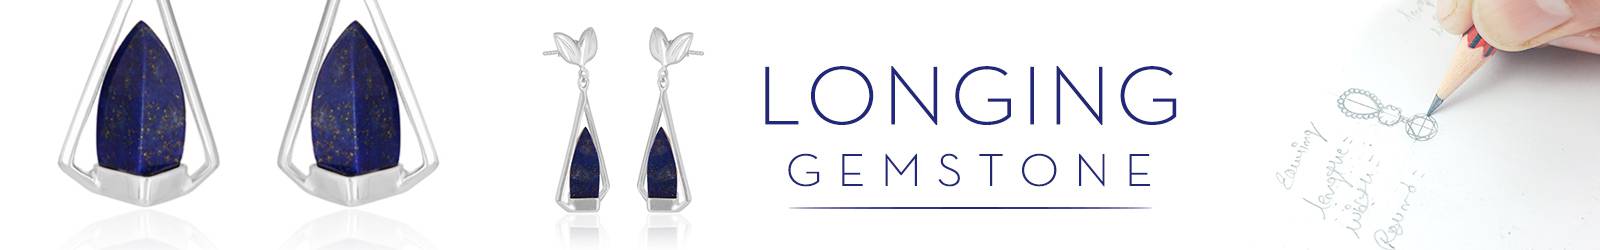 New Designer Longing Gemstone Jewelry Collection